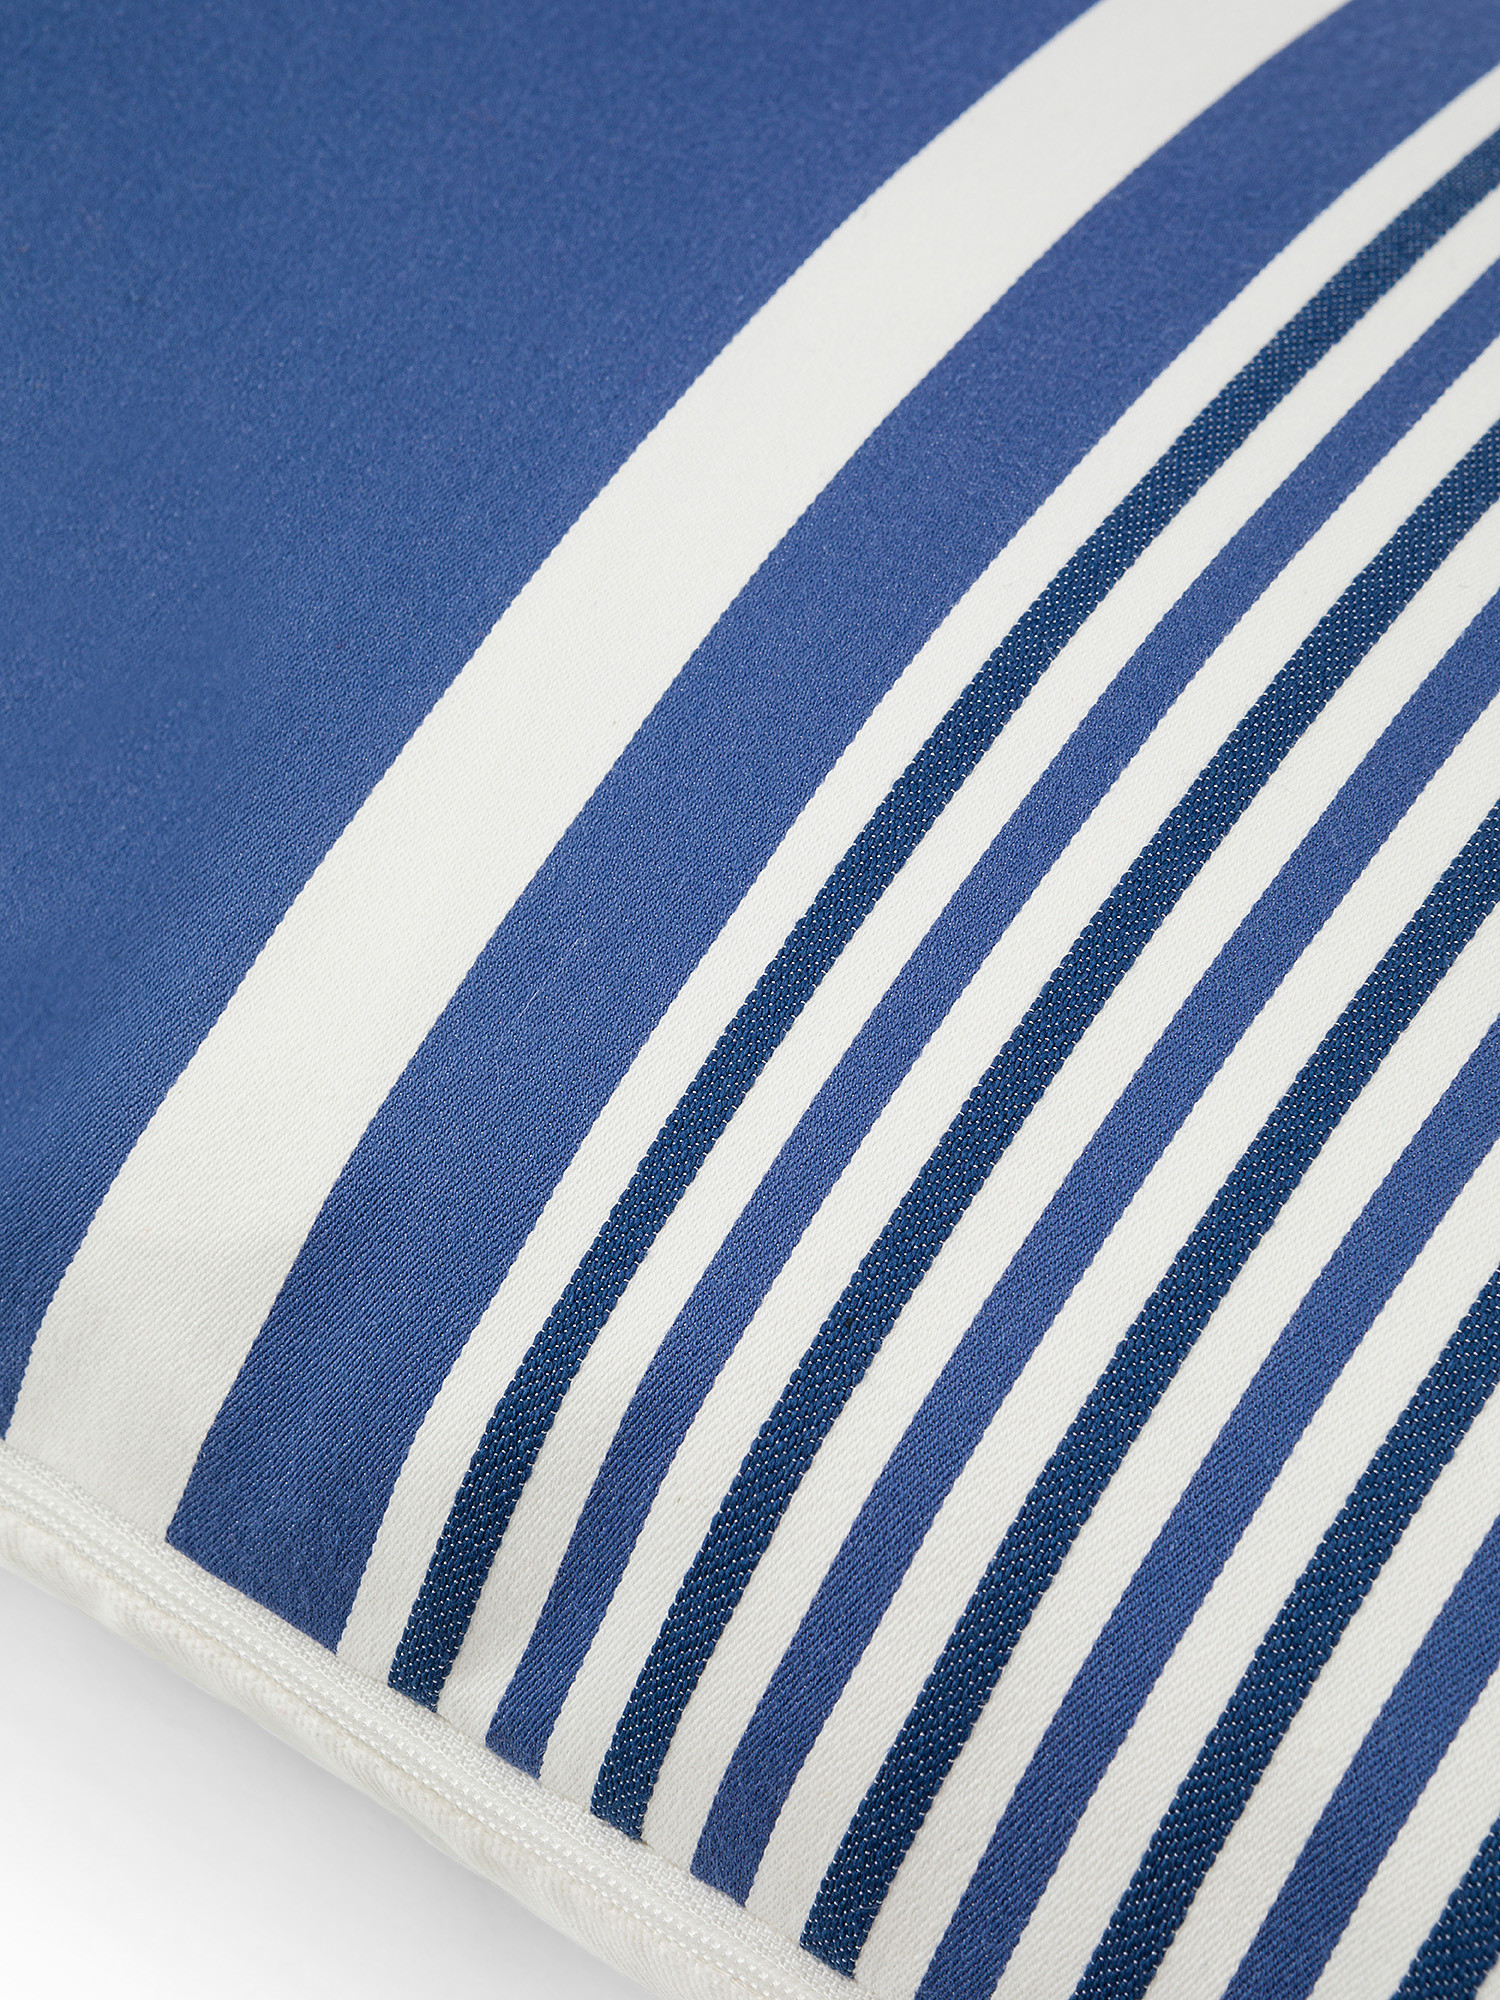 Cuscino tessuto multiriga 35x55cm, Blu, large image number 2